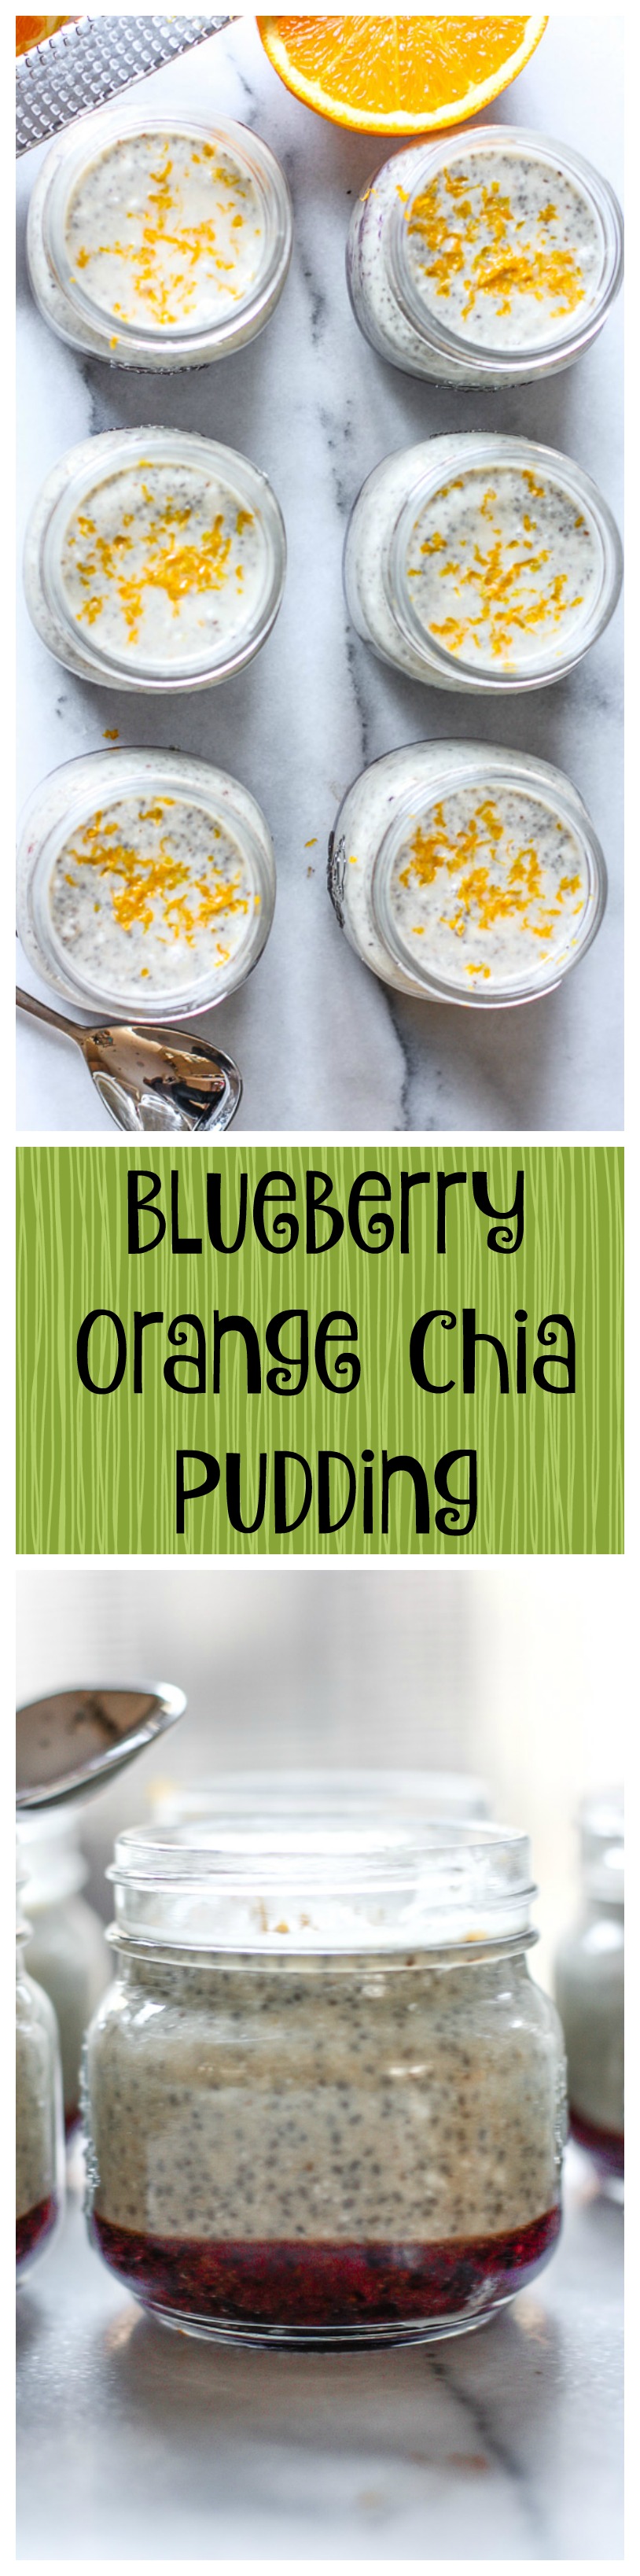 blueberry orange chia pudding collage